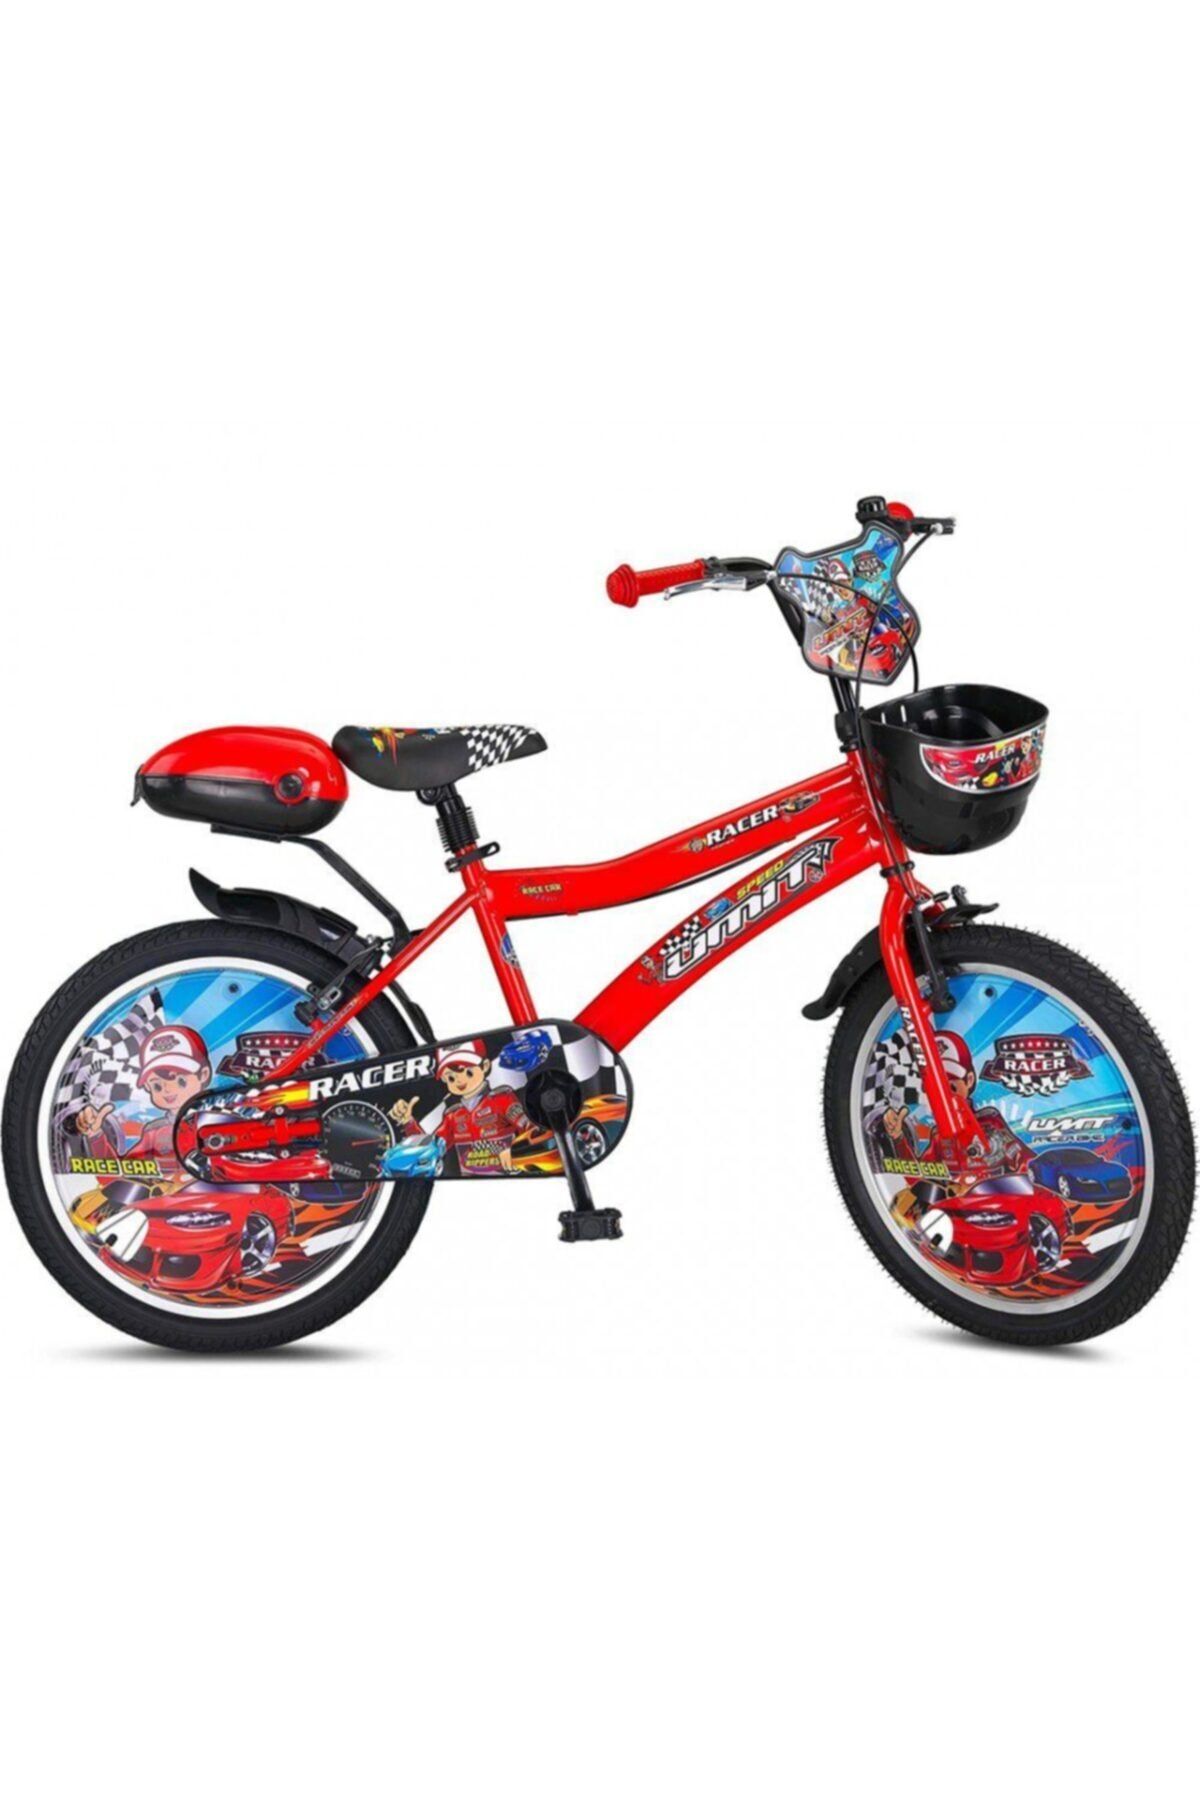 Ümit 1248 Racer-sepet-v-erkek Çocuk Bisikleti 12 Jant Kırmızı